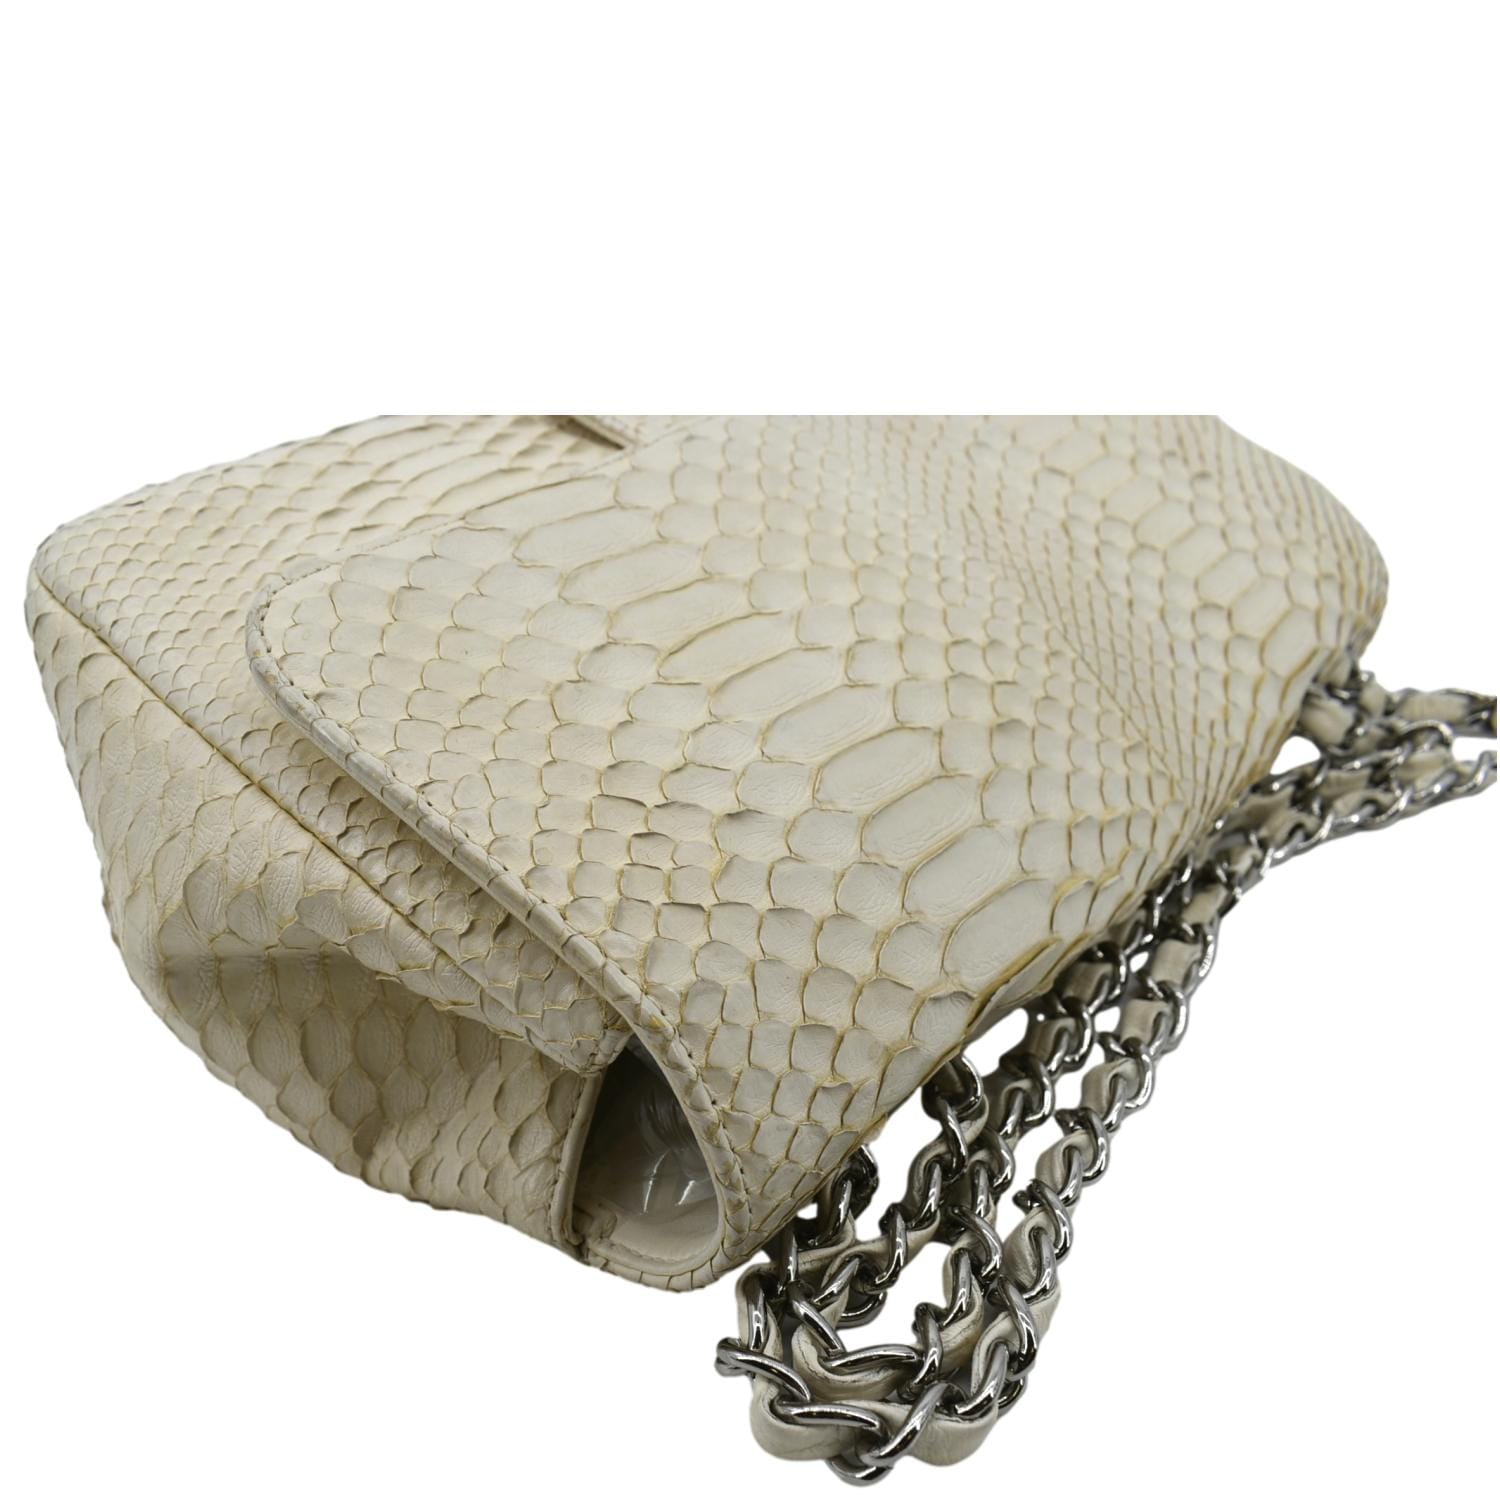 Making the Perfect Python Skin Handbag